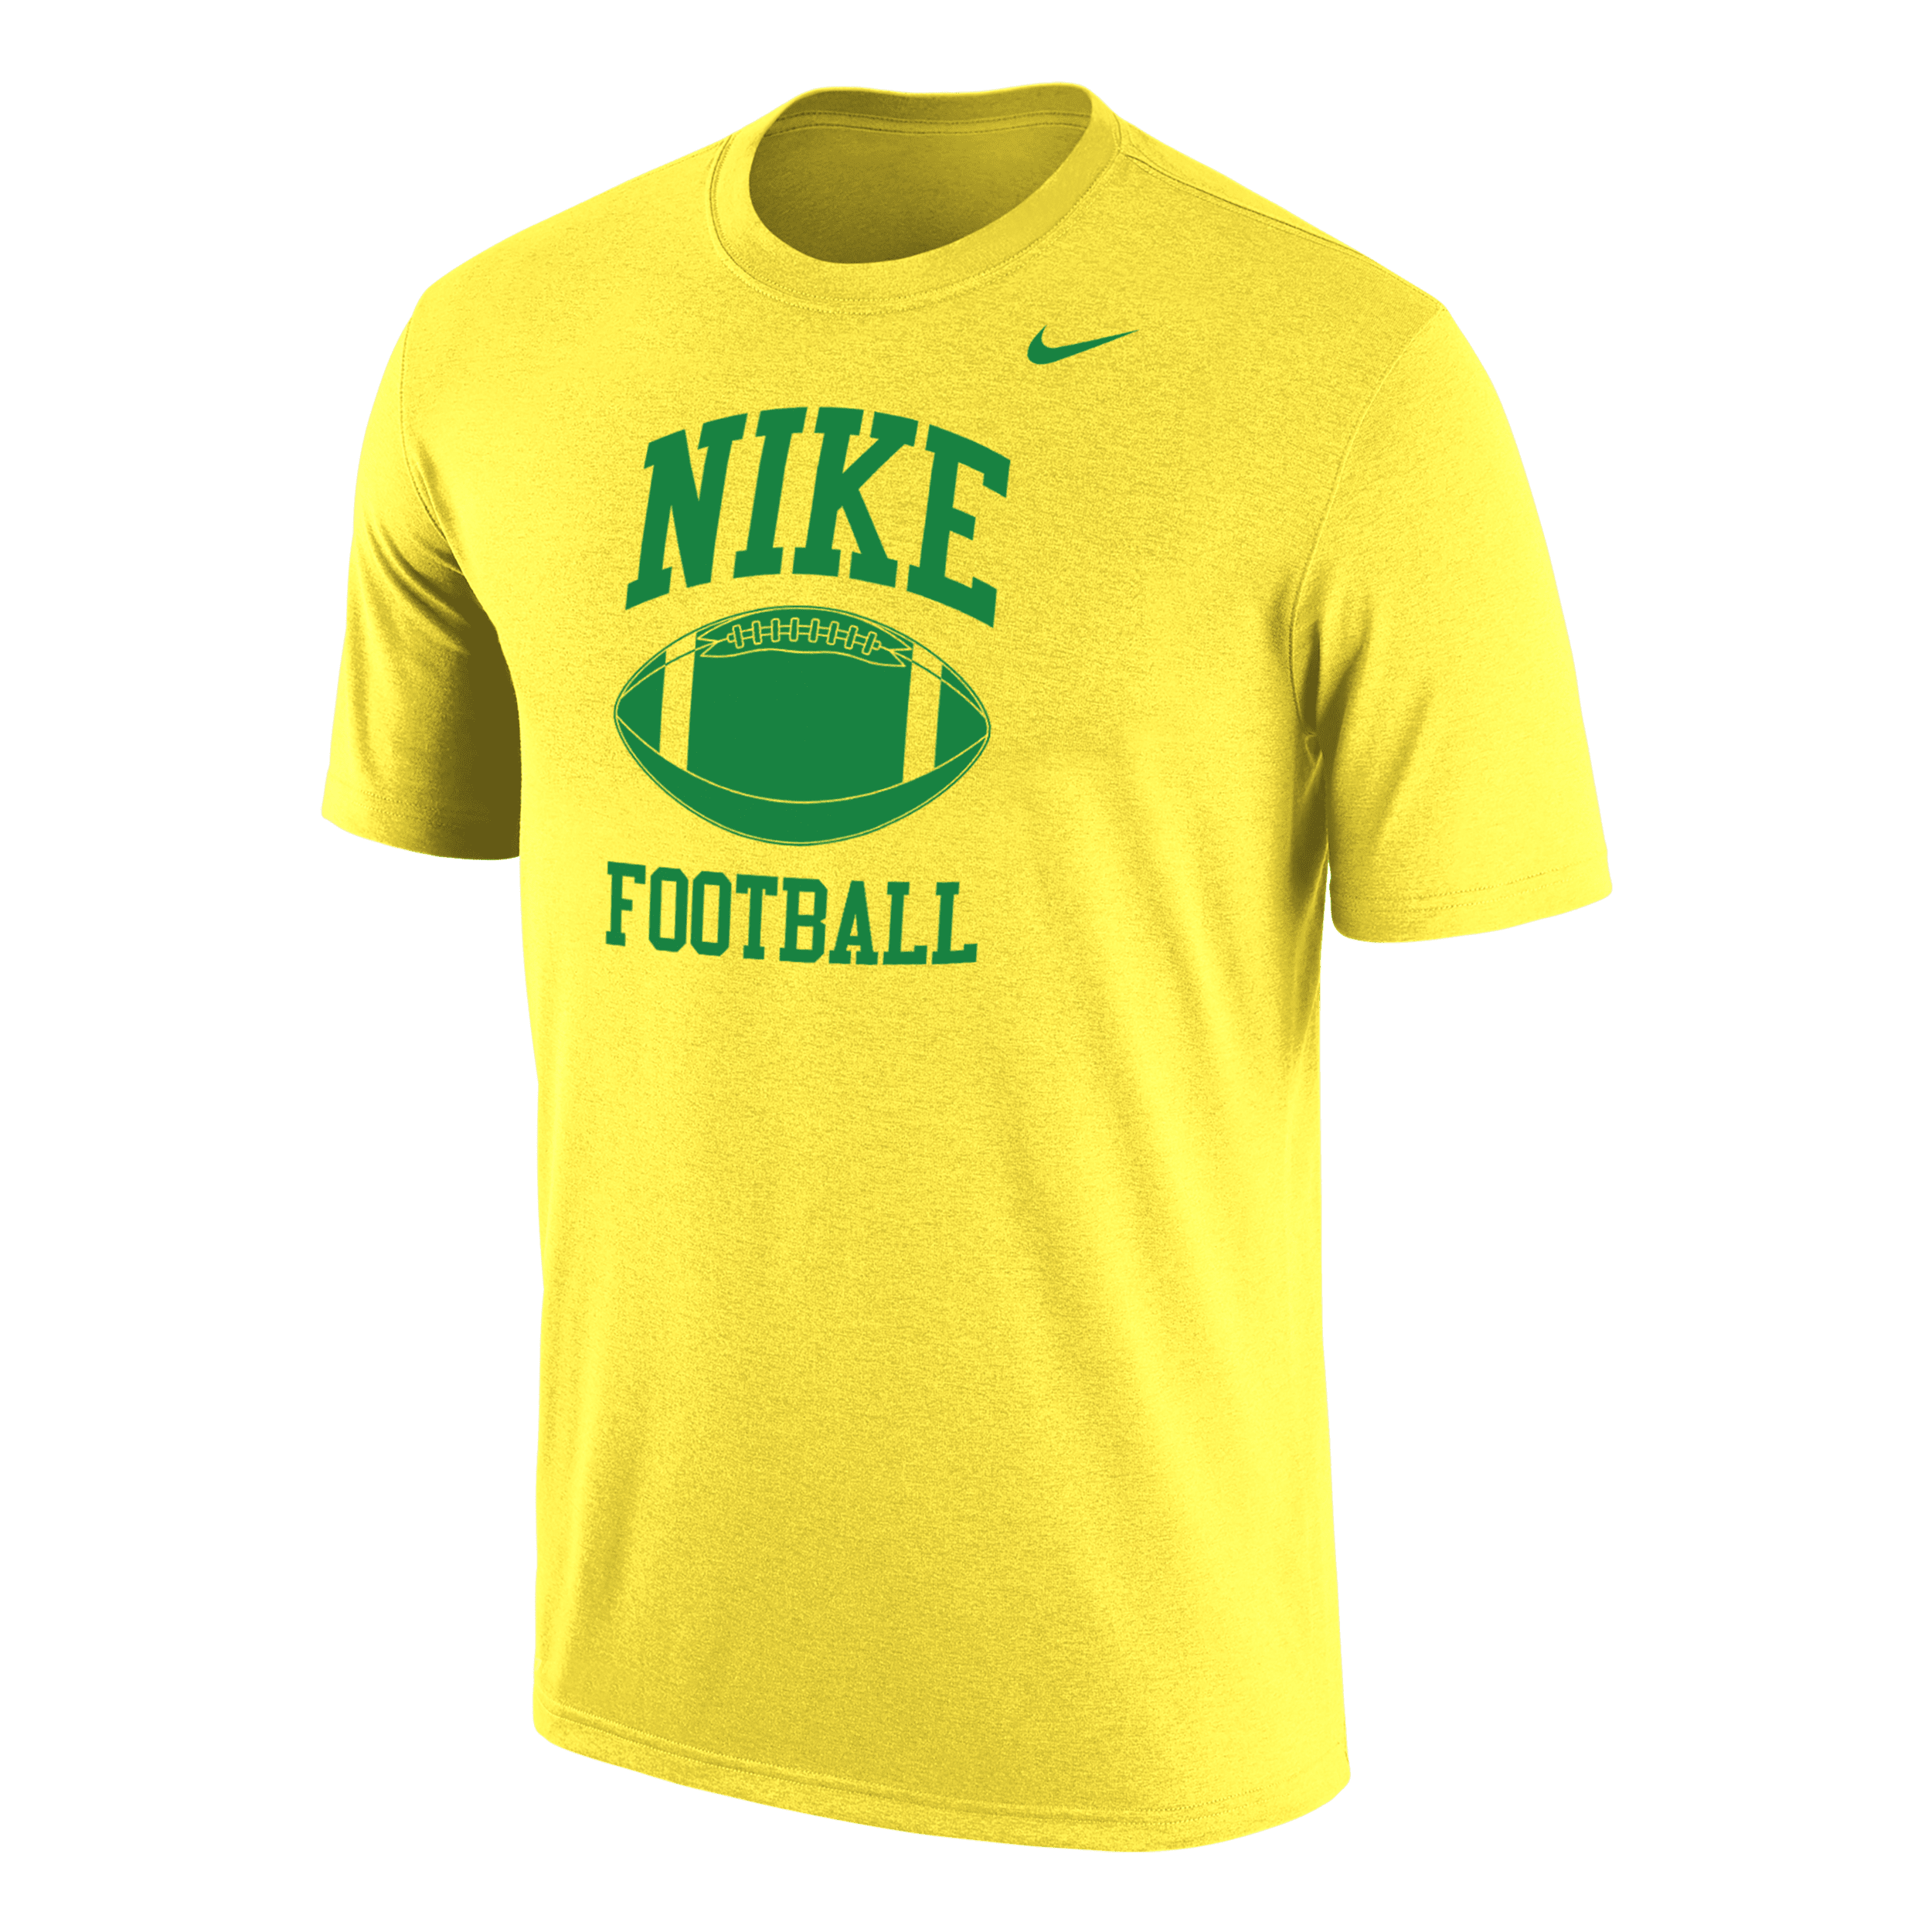 Nike Men's Football Dri-fit T-shirt In Yellow